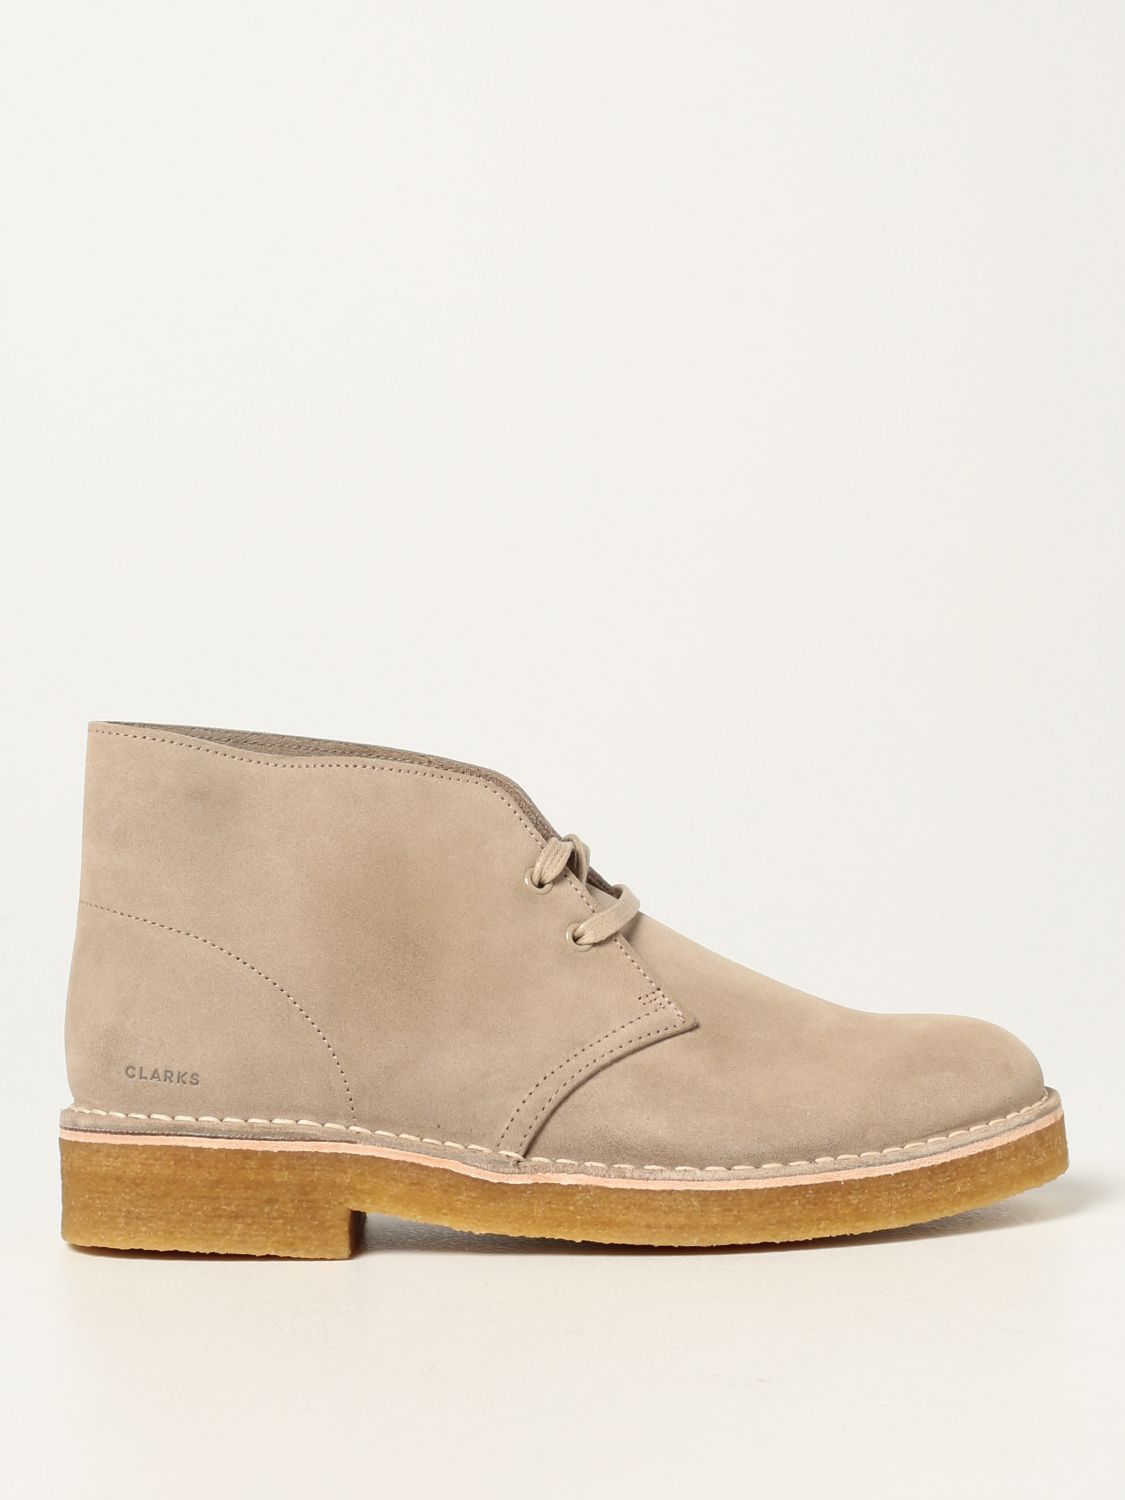 CLARKS: Shoes men | Chukka Boots Clarks Chukka Clarks 155800 GIGLIO.COM